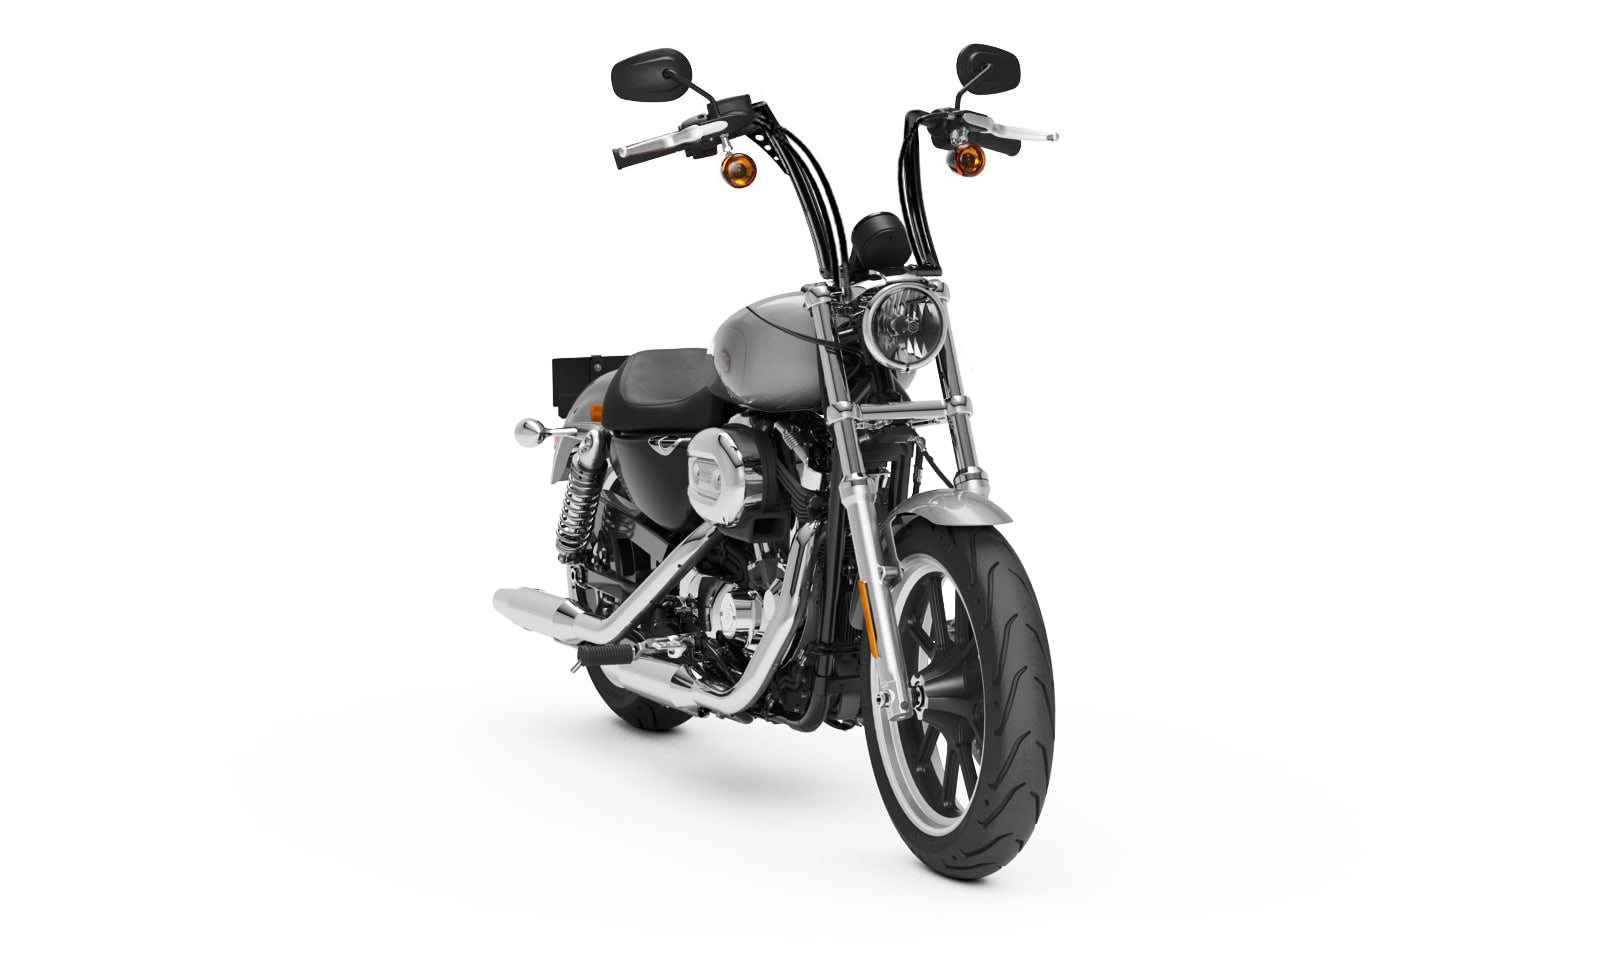 Viking Iron Born 12" Handlebar For Harley Sportster Superlow Gloss Black Bag on Bike View @expand